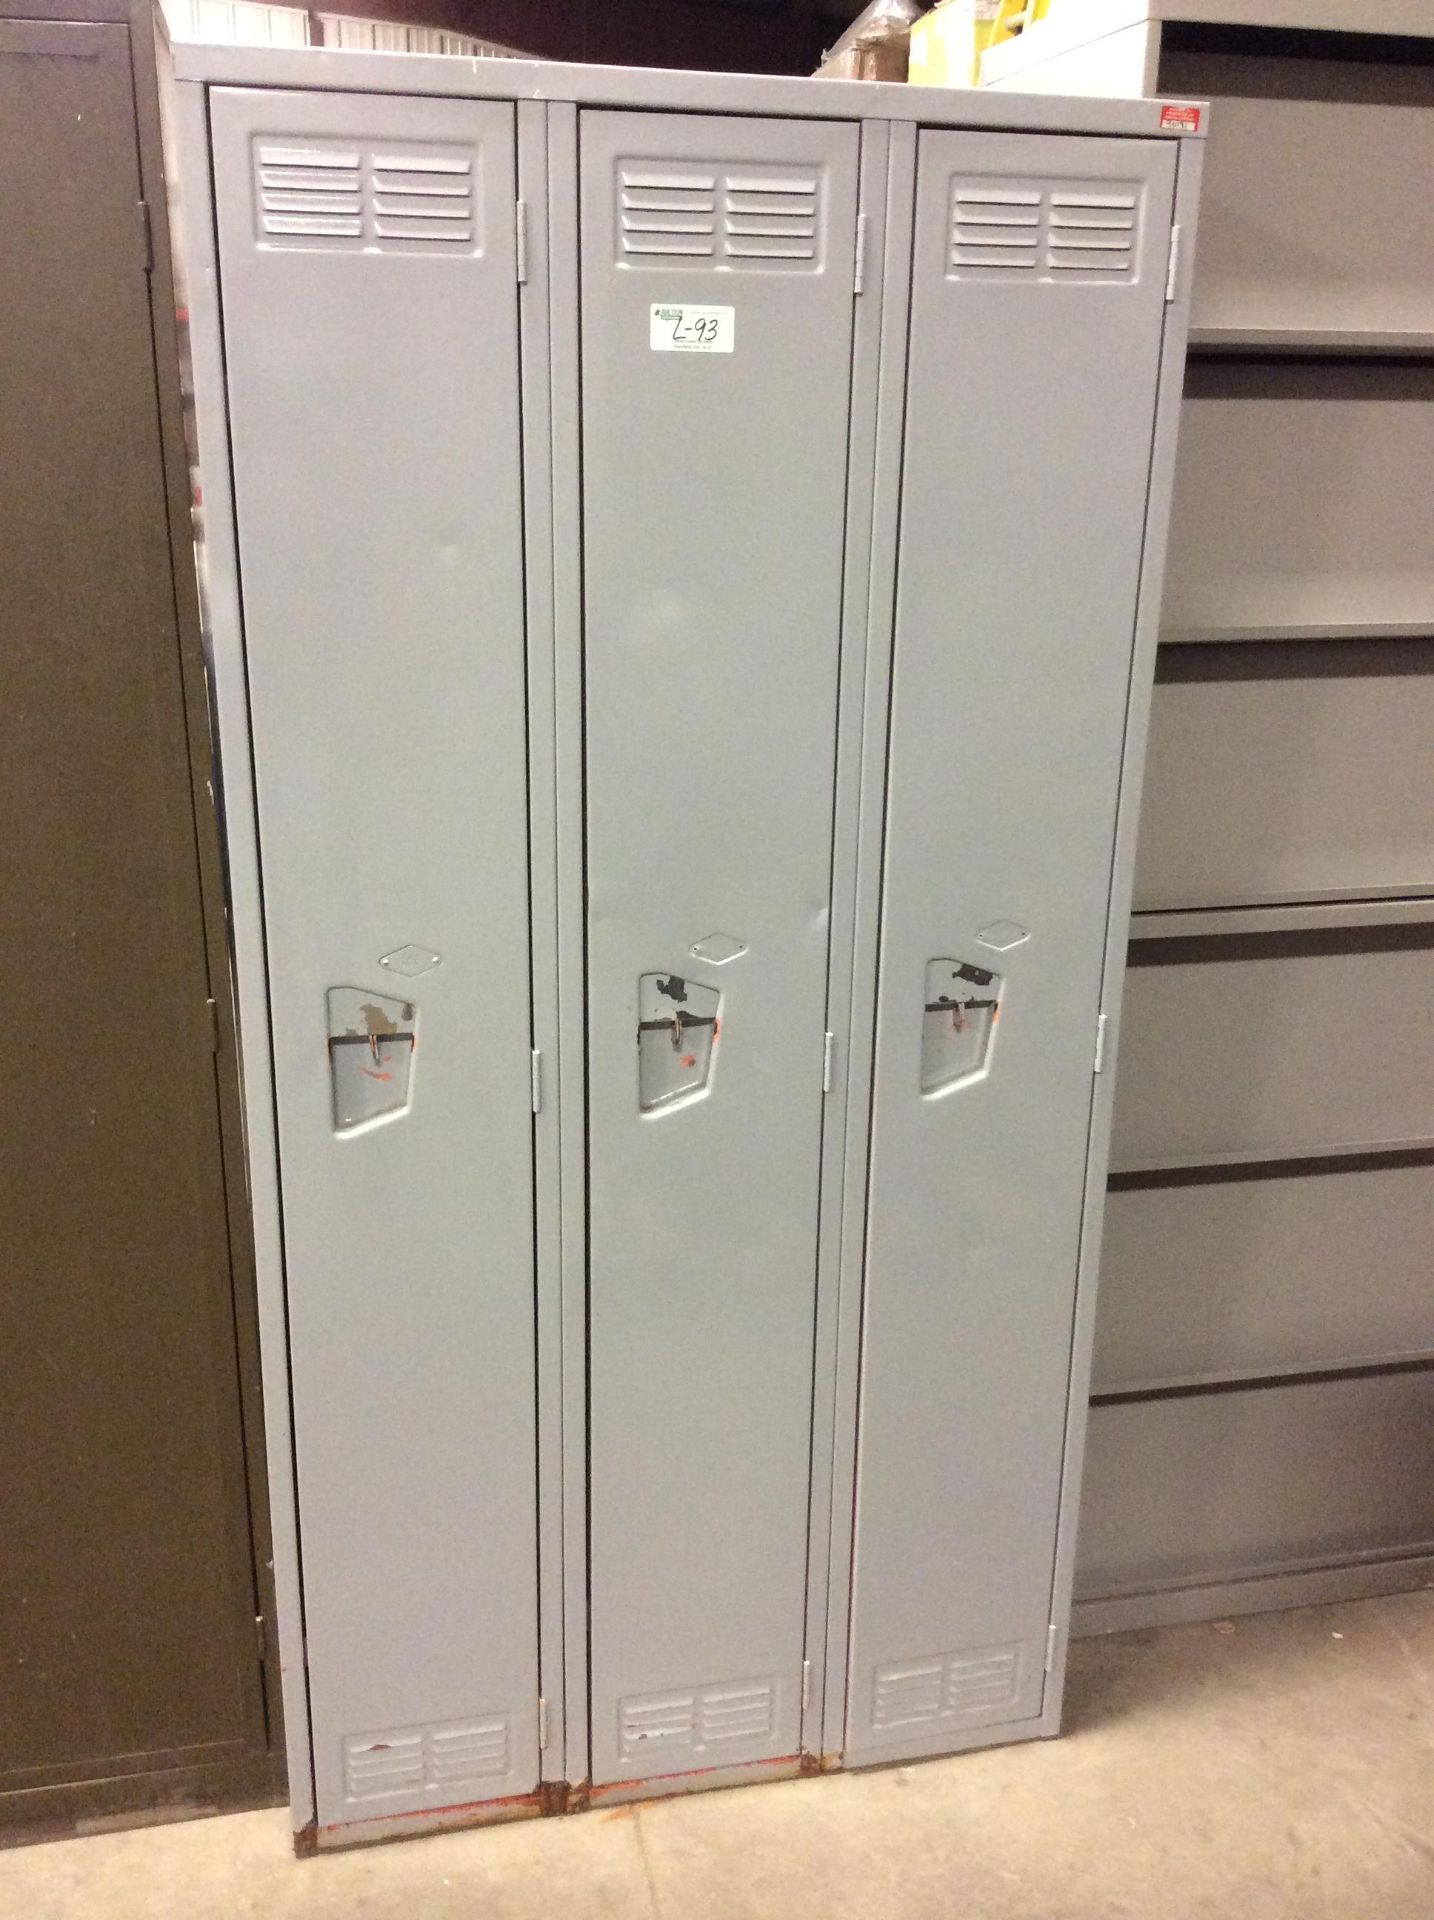 1 Set of 3 Full Size Lockers